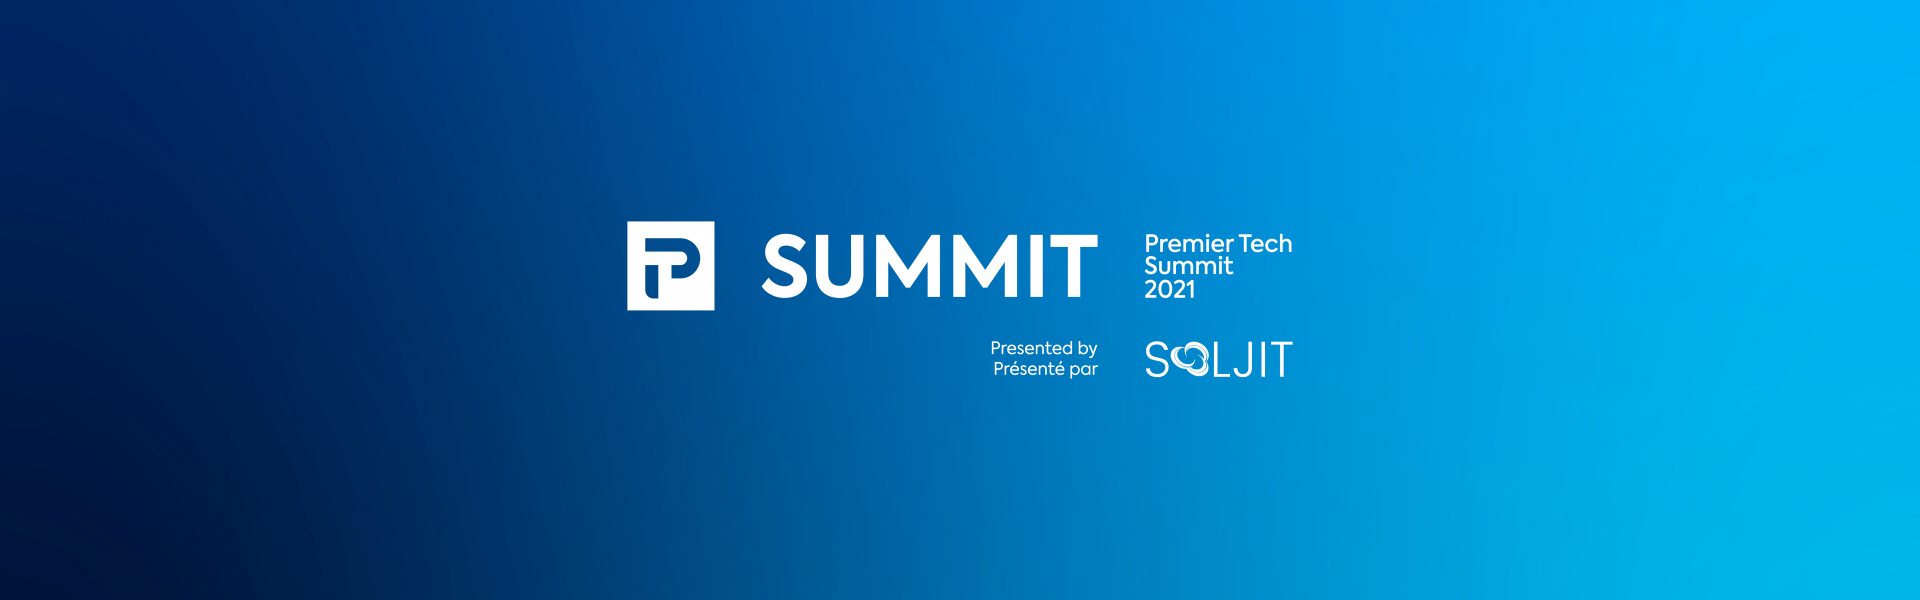 Premier Tech Summit 2021